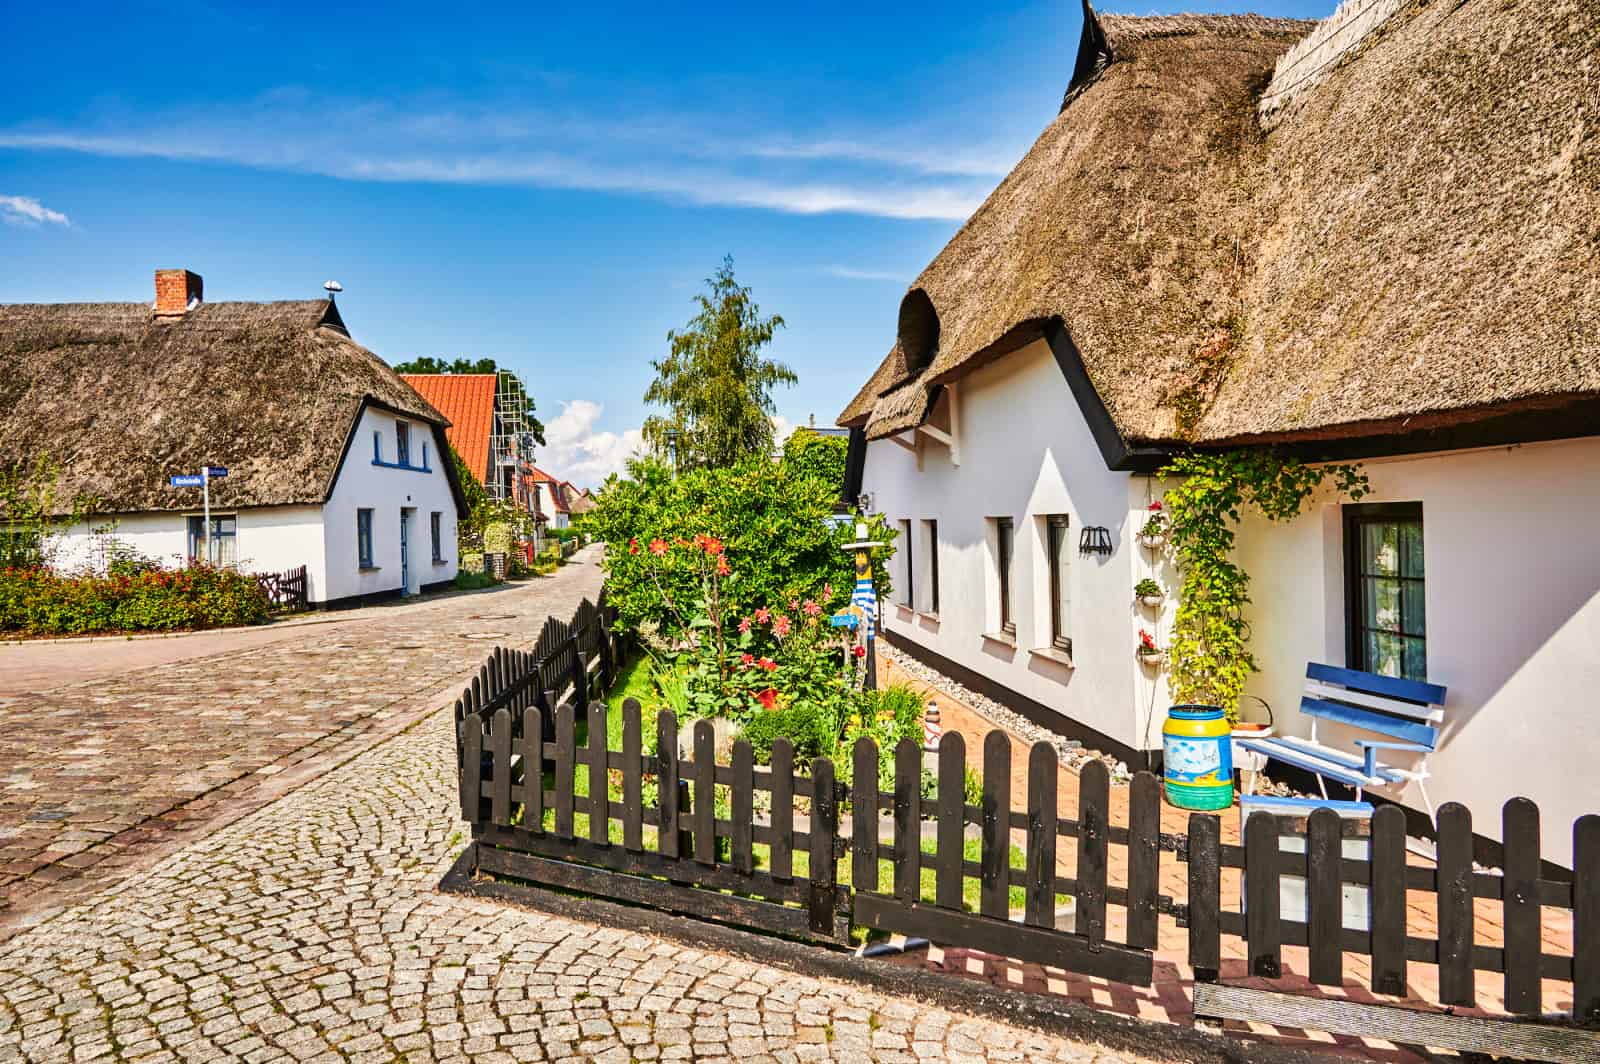 Ferienhaus an der Ostsee